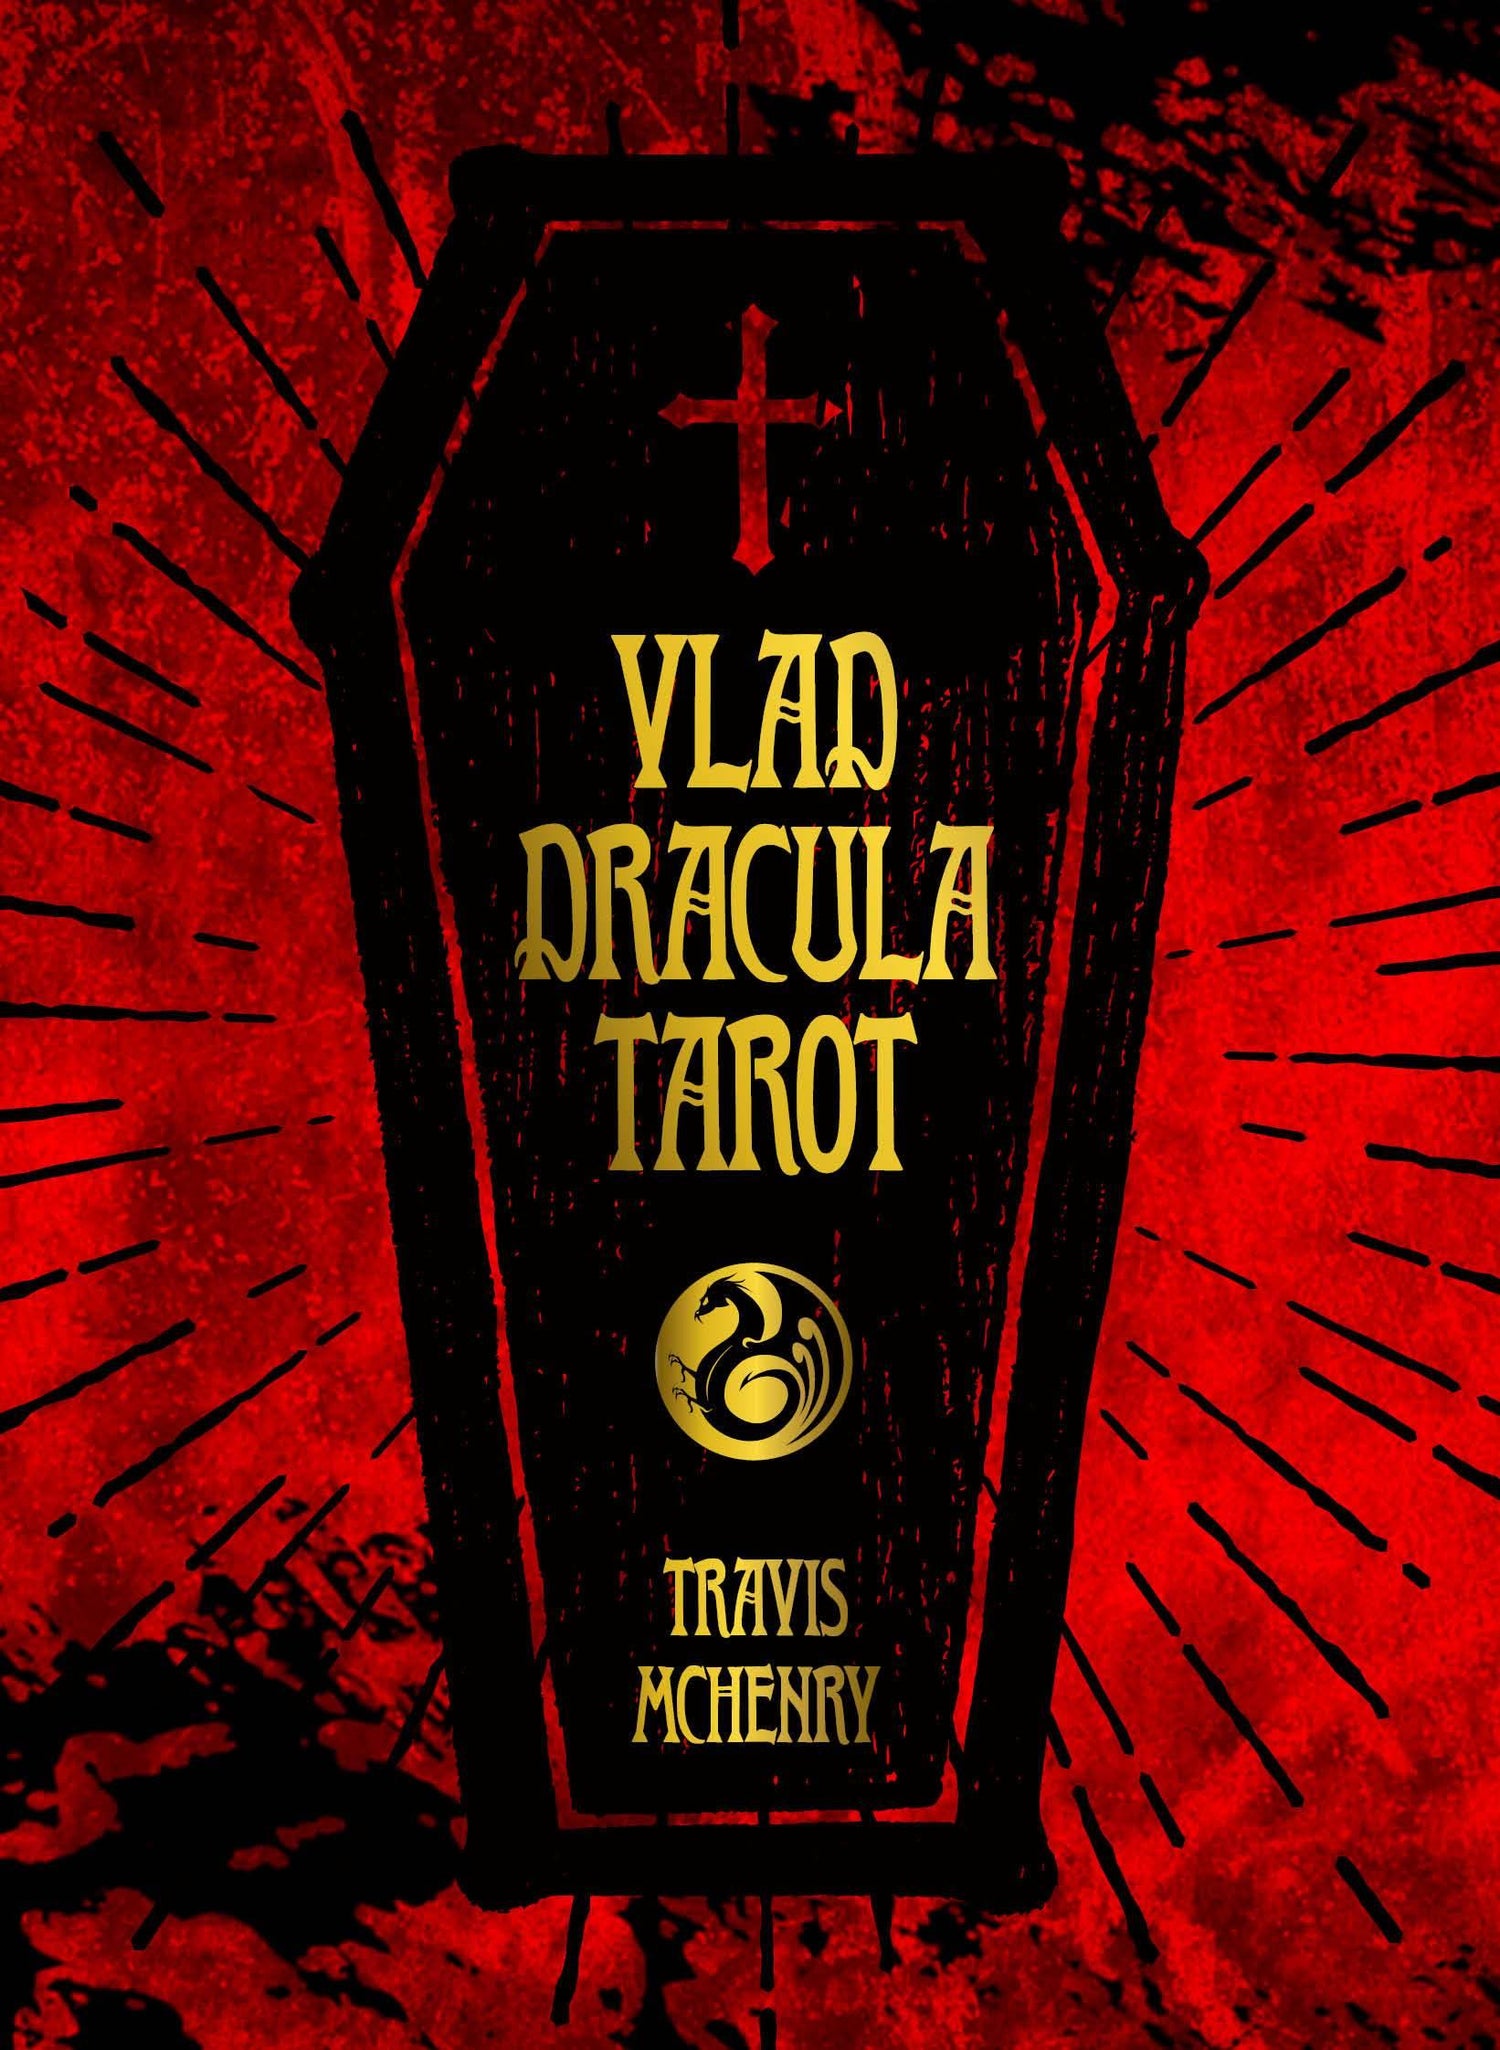 Vlad Dracula Tarot - JOURNEY artisan soaps & candles